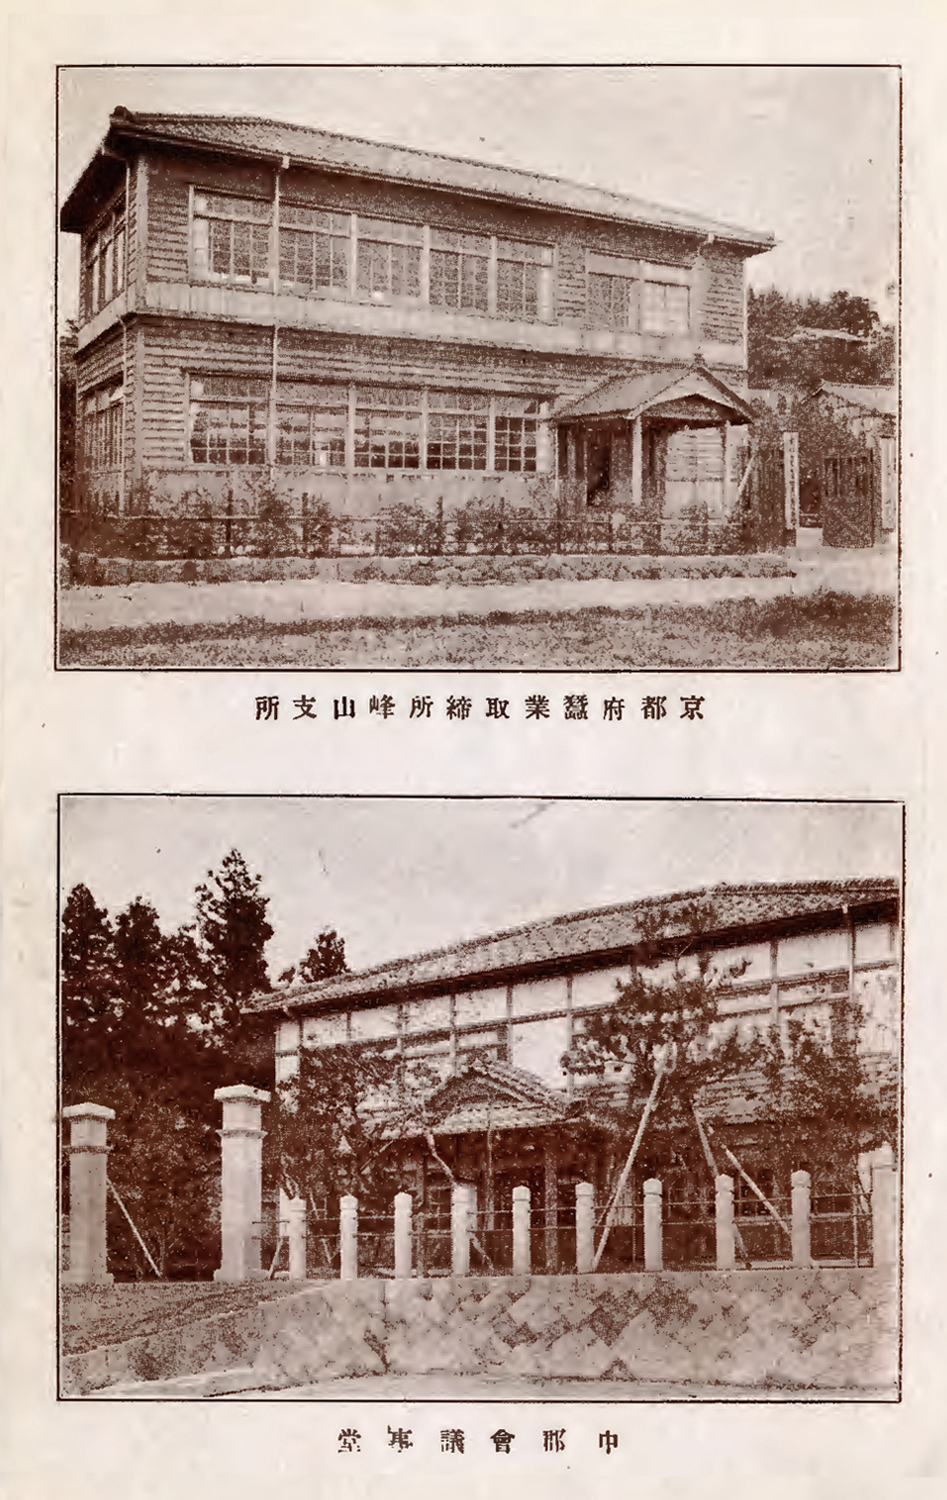 中郡会議事堂's image 1